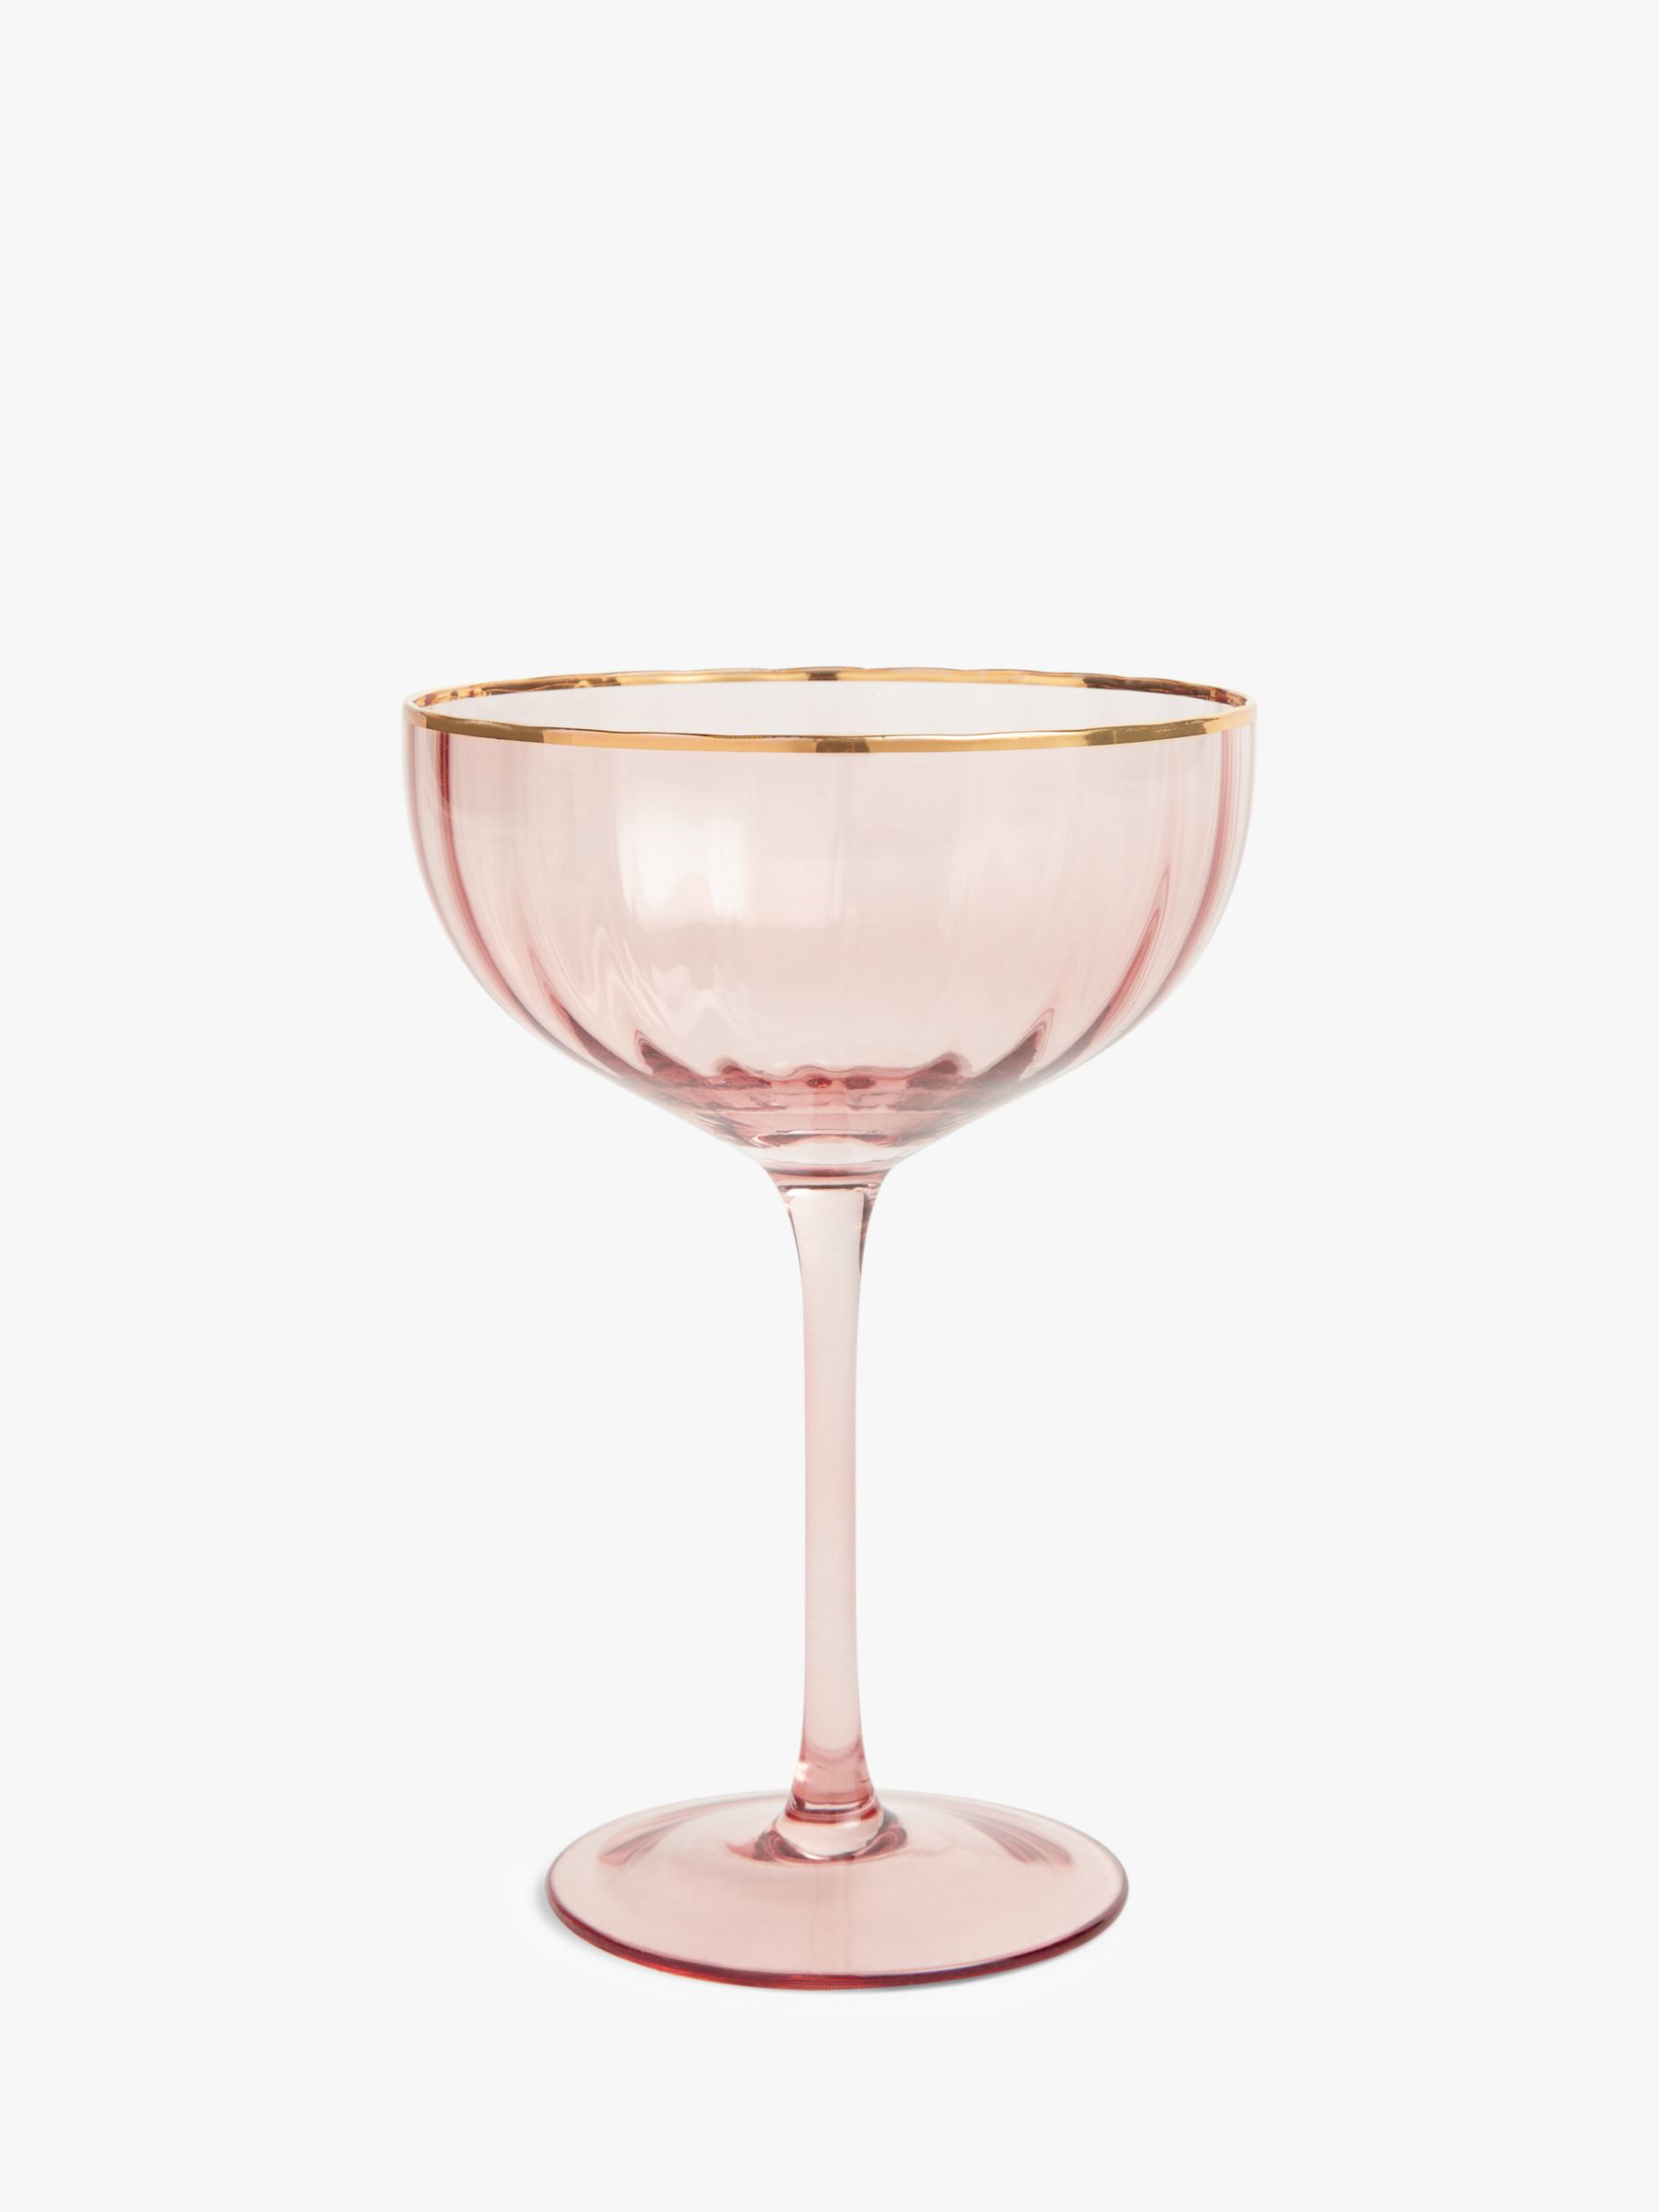 Association centeret Vanding John Lewis Christmas Ribbed Coupe Cocktail Glass, Set of 2, 298ml, Pink/Gold